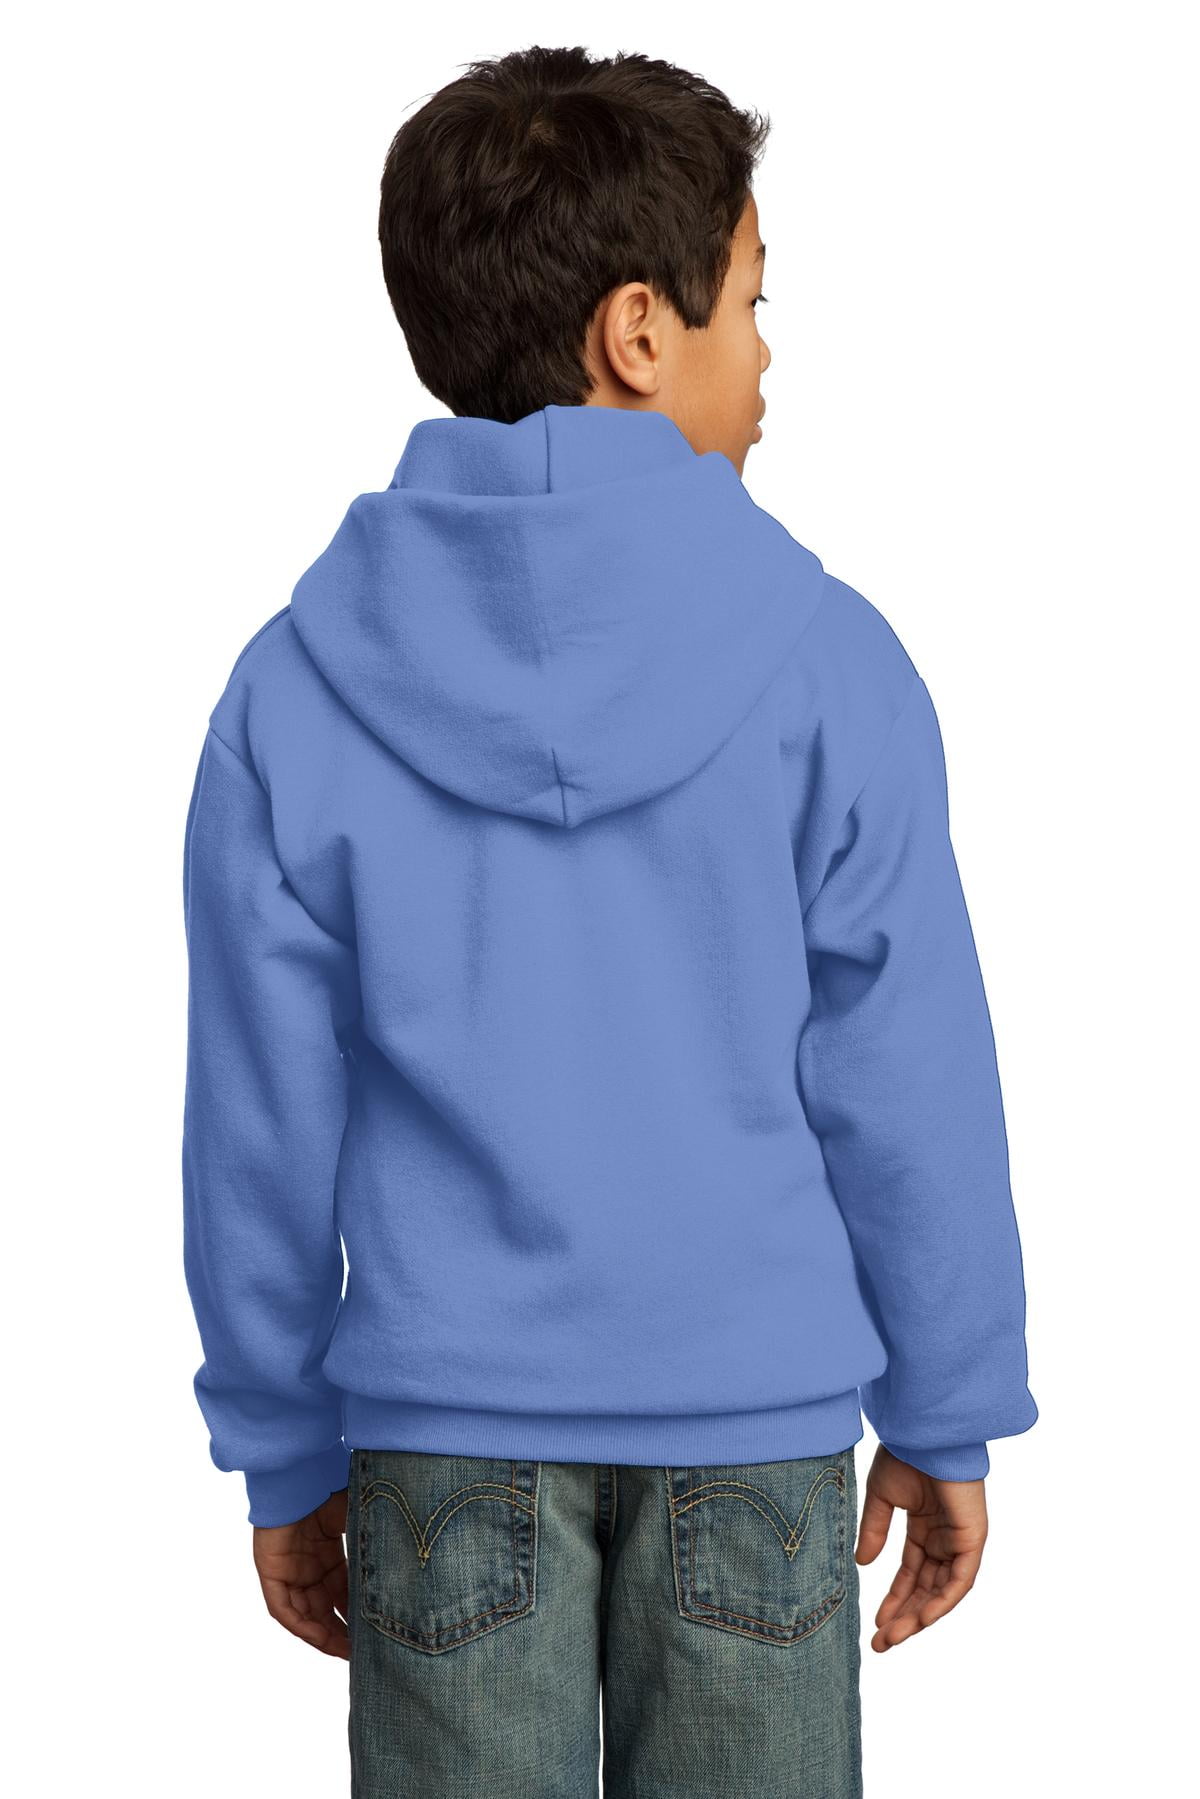 Company Sweatshirt-L Core (Carolina Pullover & Blue) Youth Fleece Hooded Port